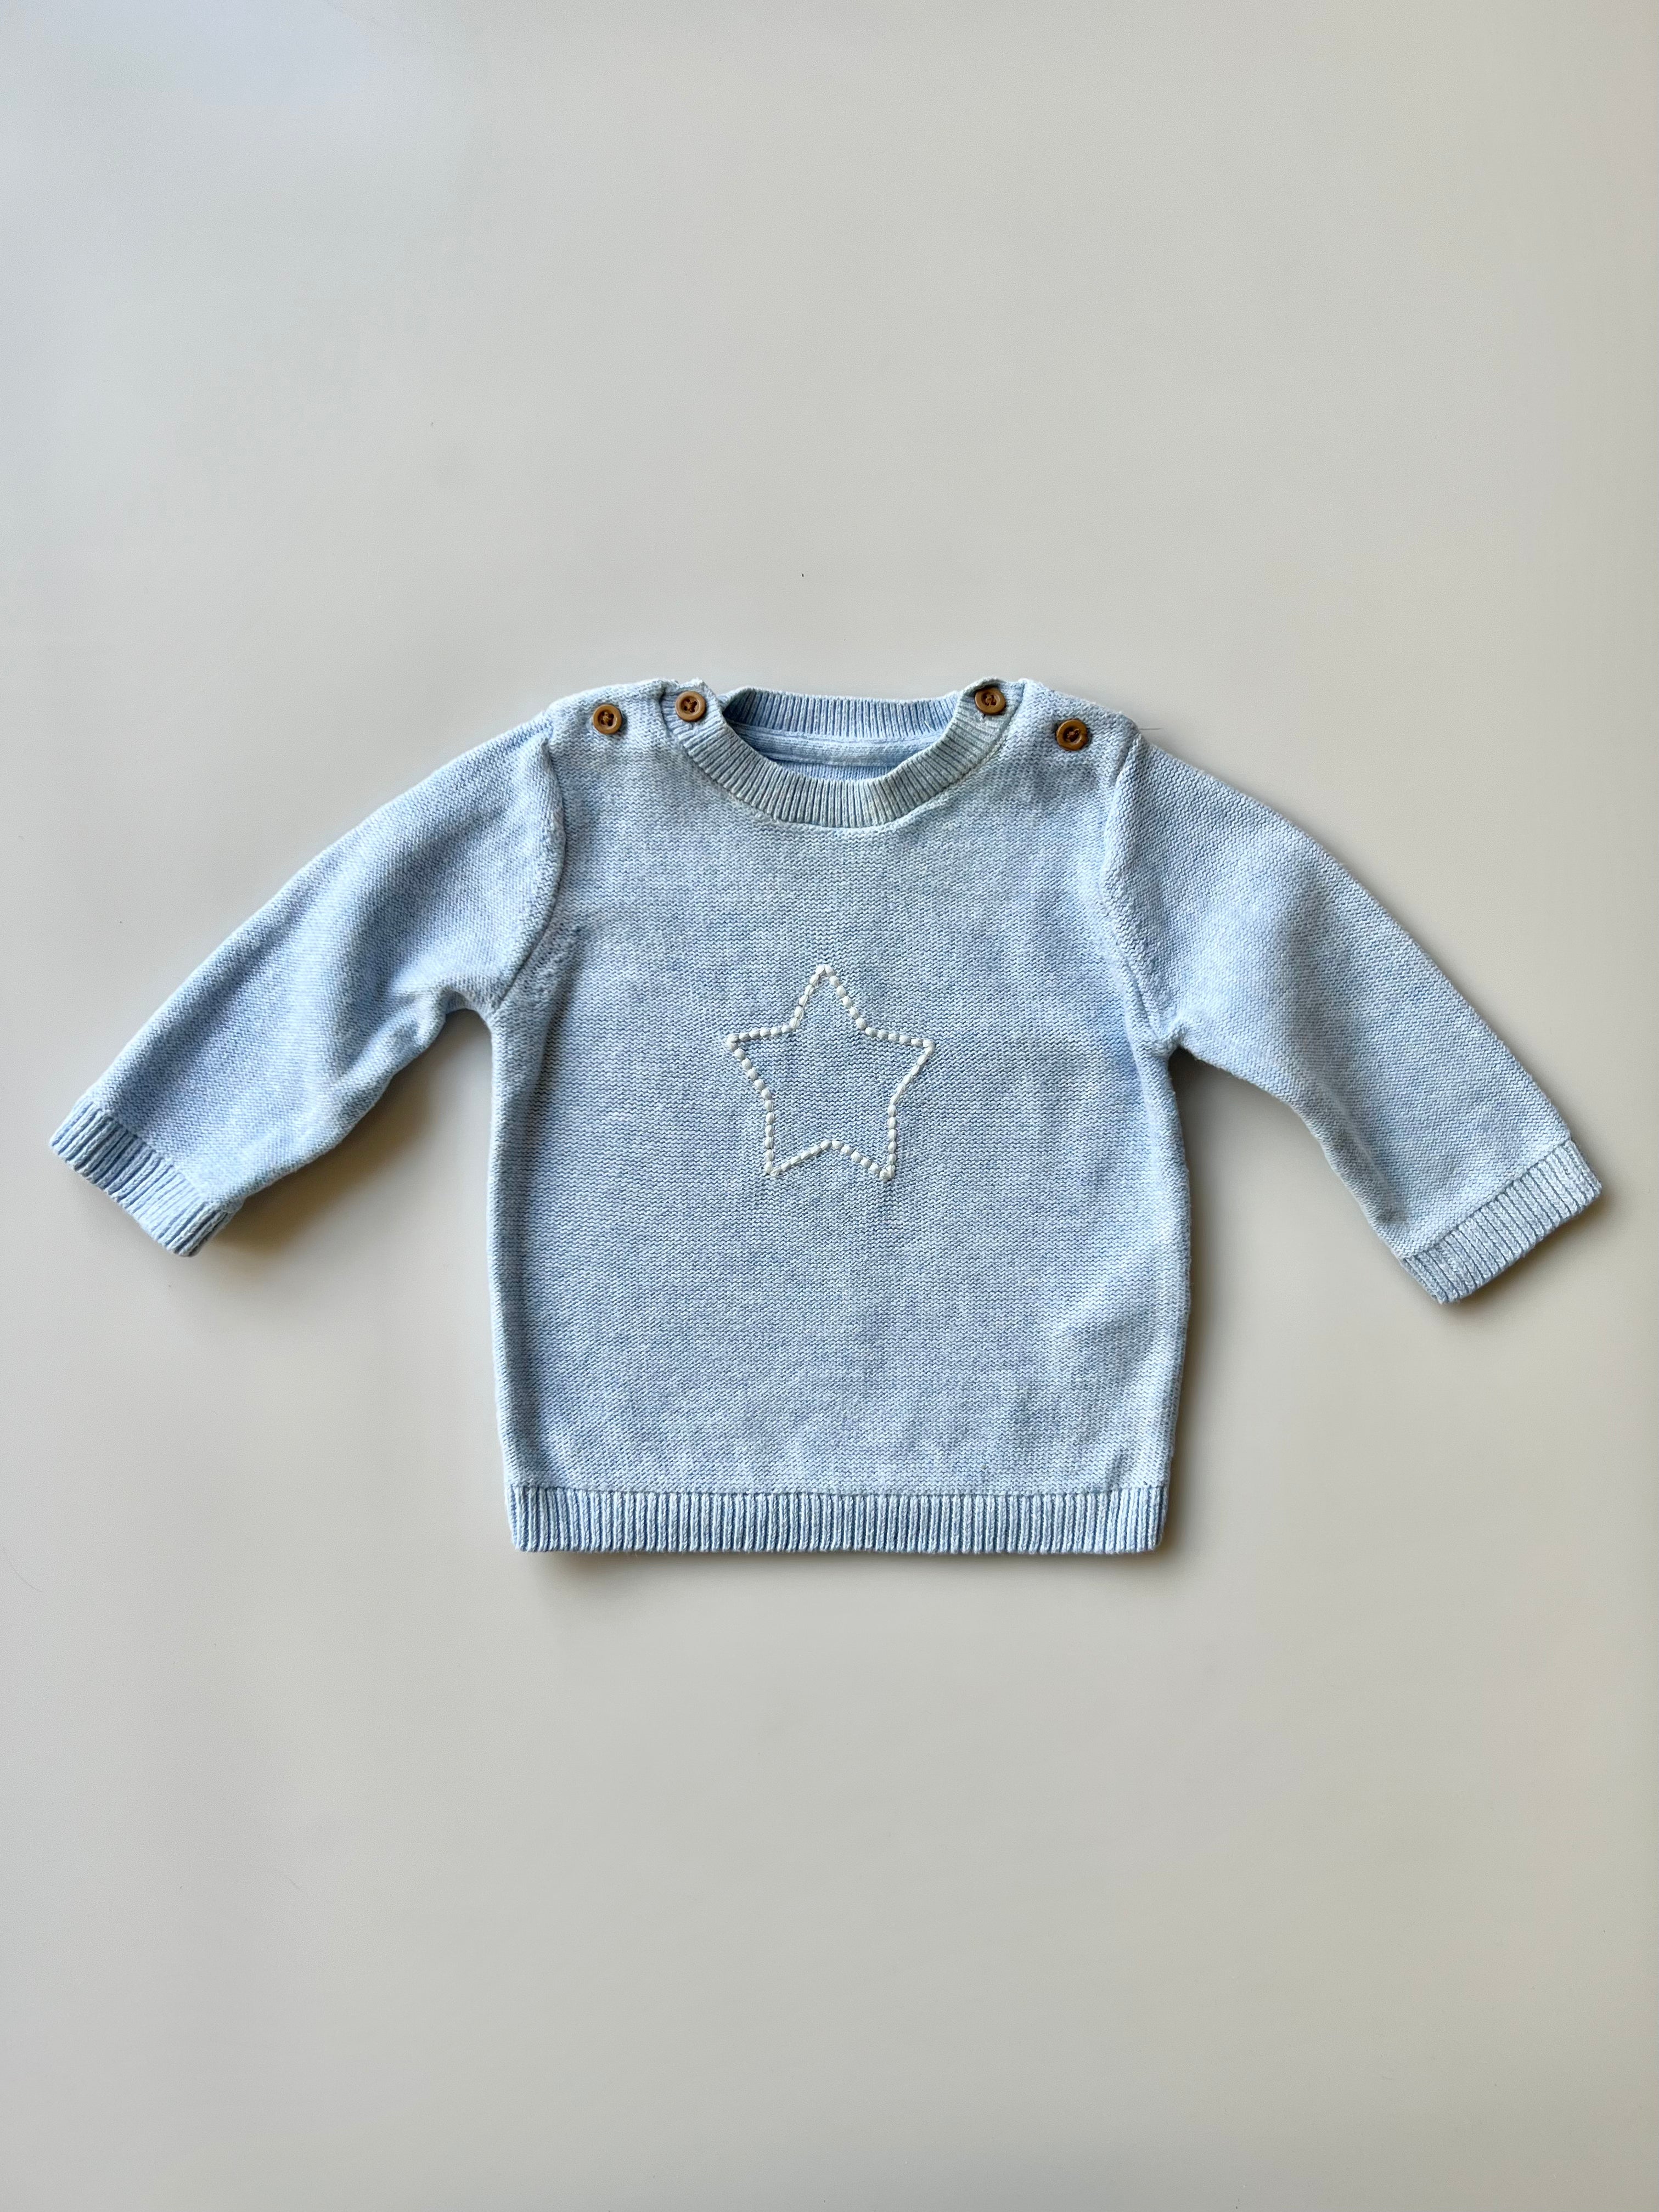 Zara Blue Knit Star Jumper 3-6 Months